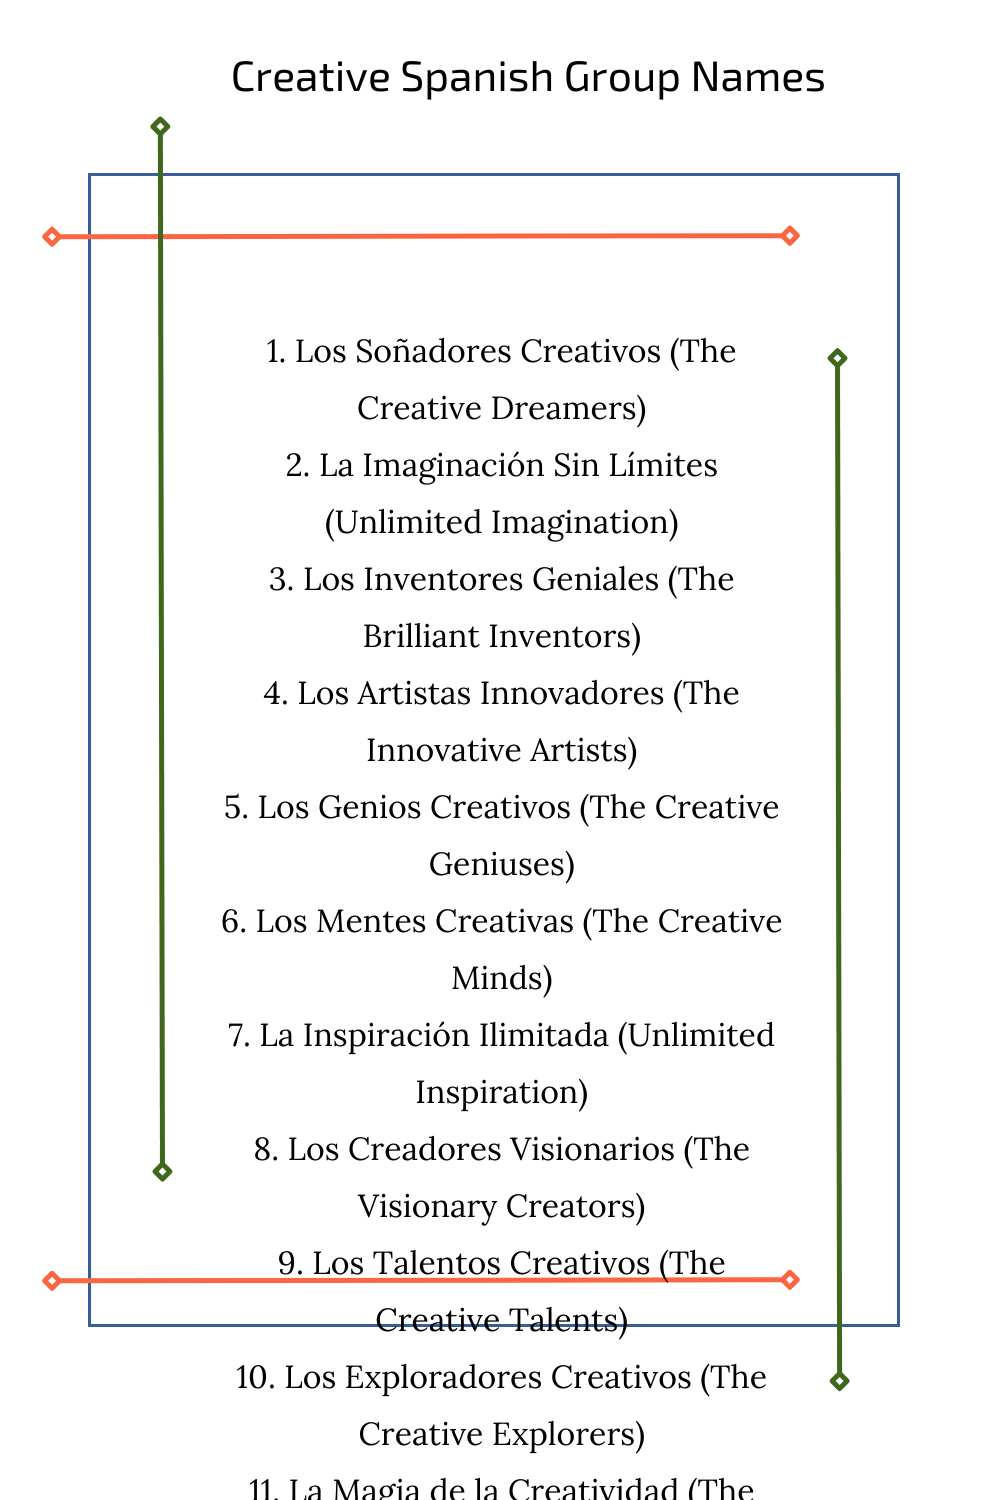 Creative Spanish Group Names